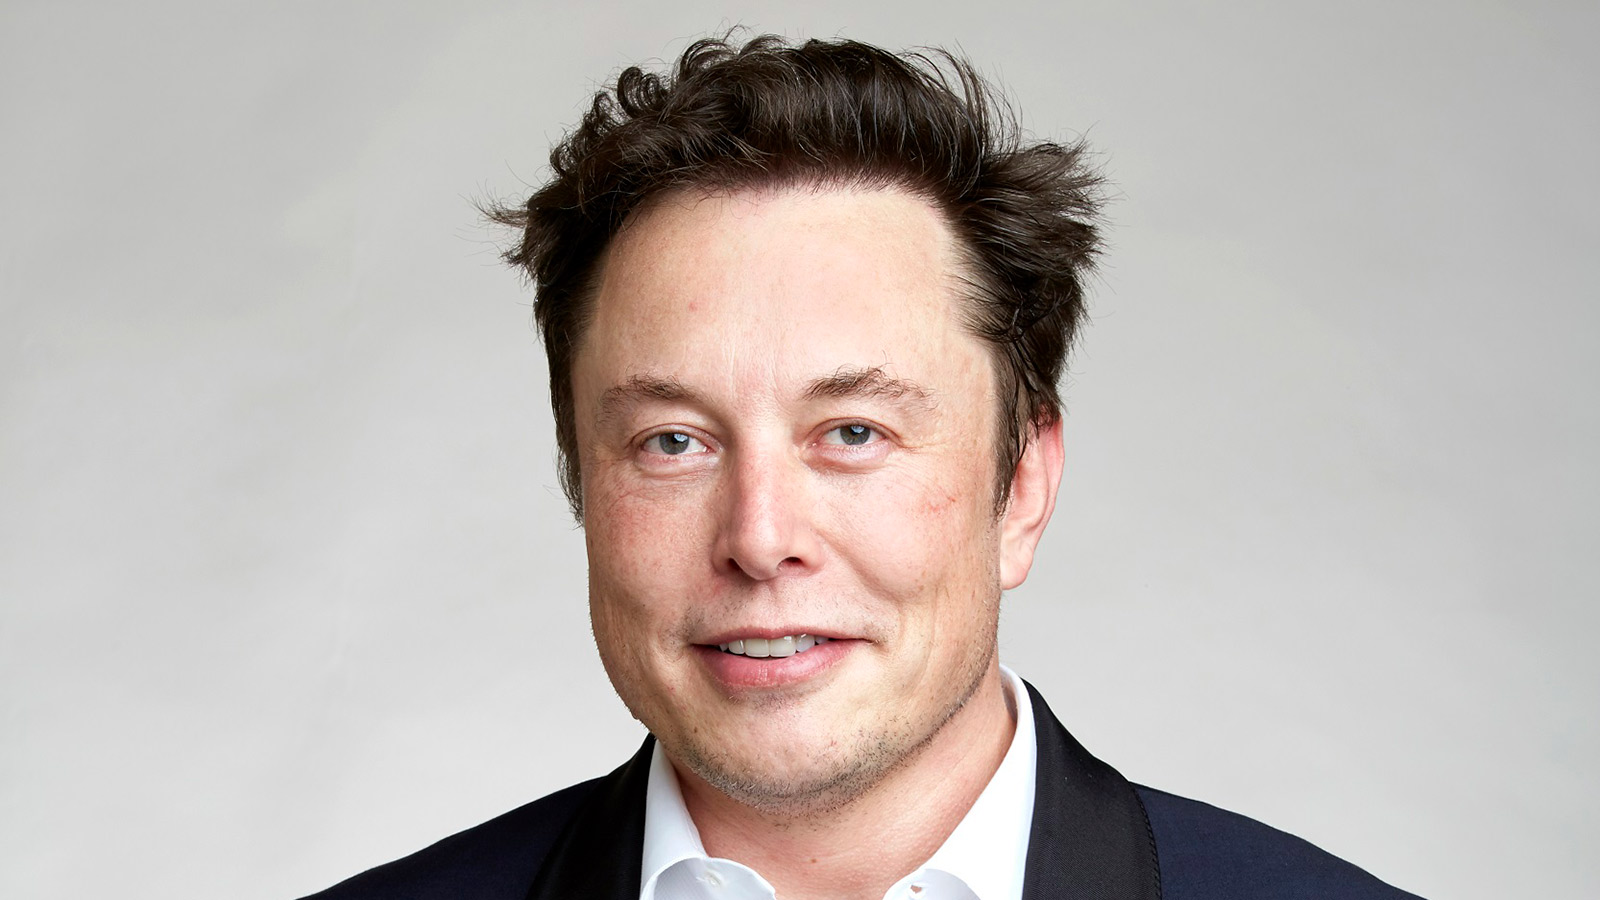 A headshot of business tycoon Elon Musk